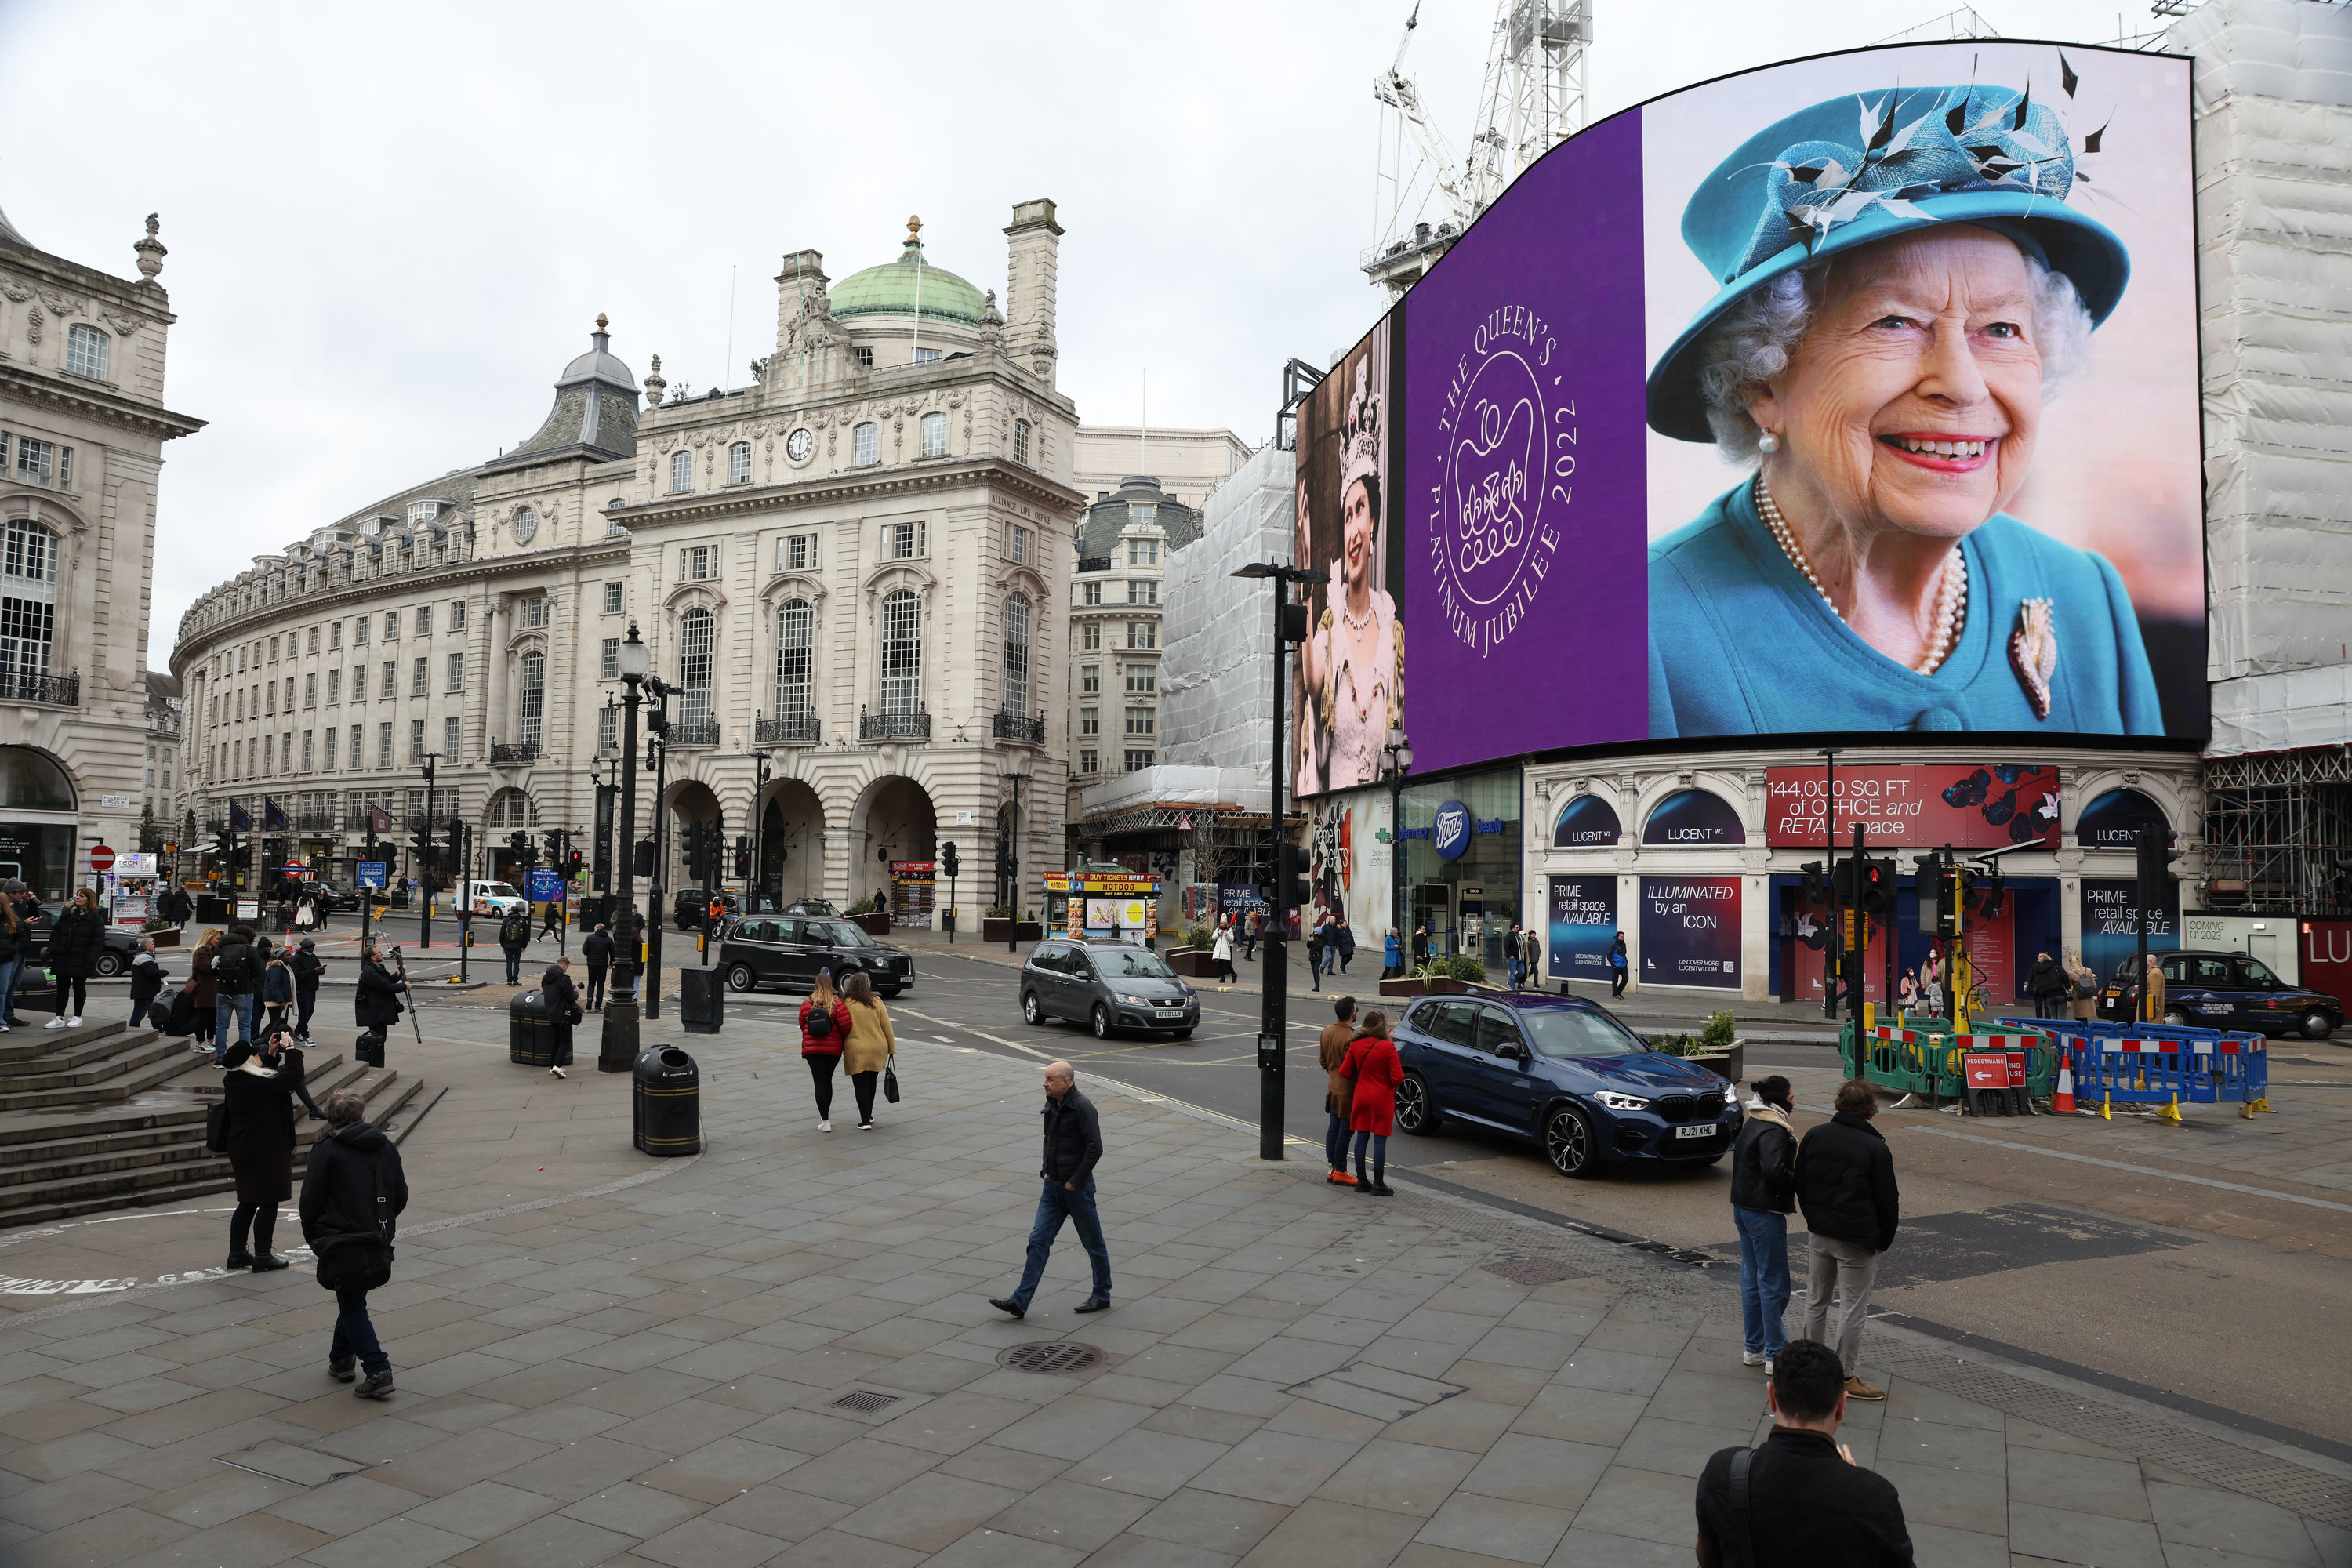 Queen Elizabeth II on a giant screen in London as people walk around on the street 